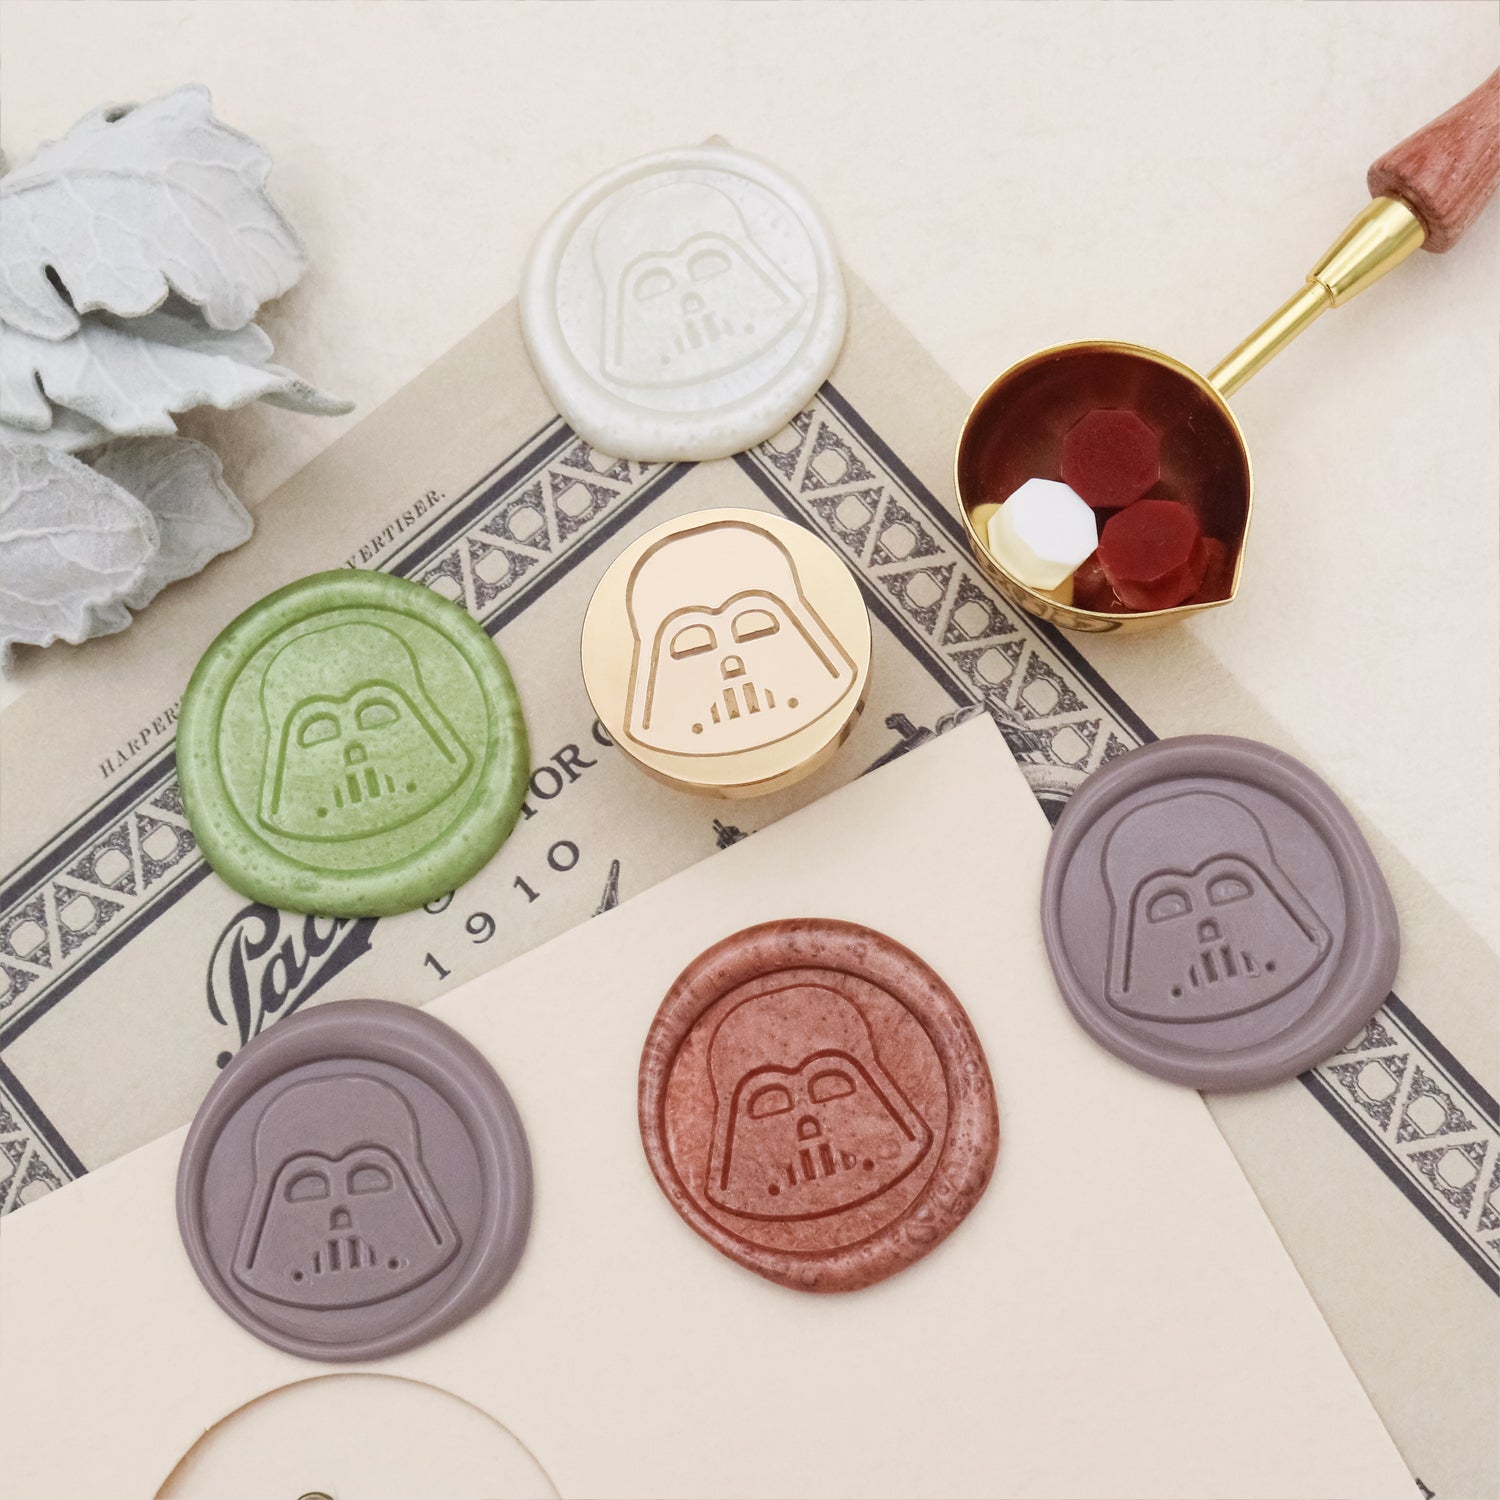  Star Wars Wax Seal Stamp Set, GANGSHA 7 Pieces Sealing